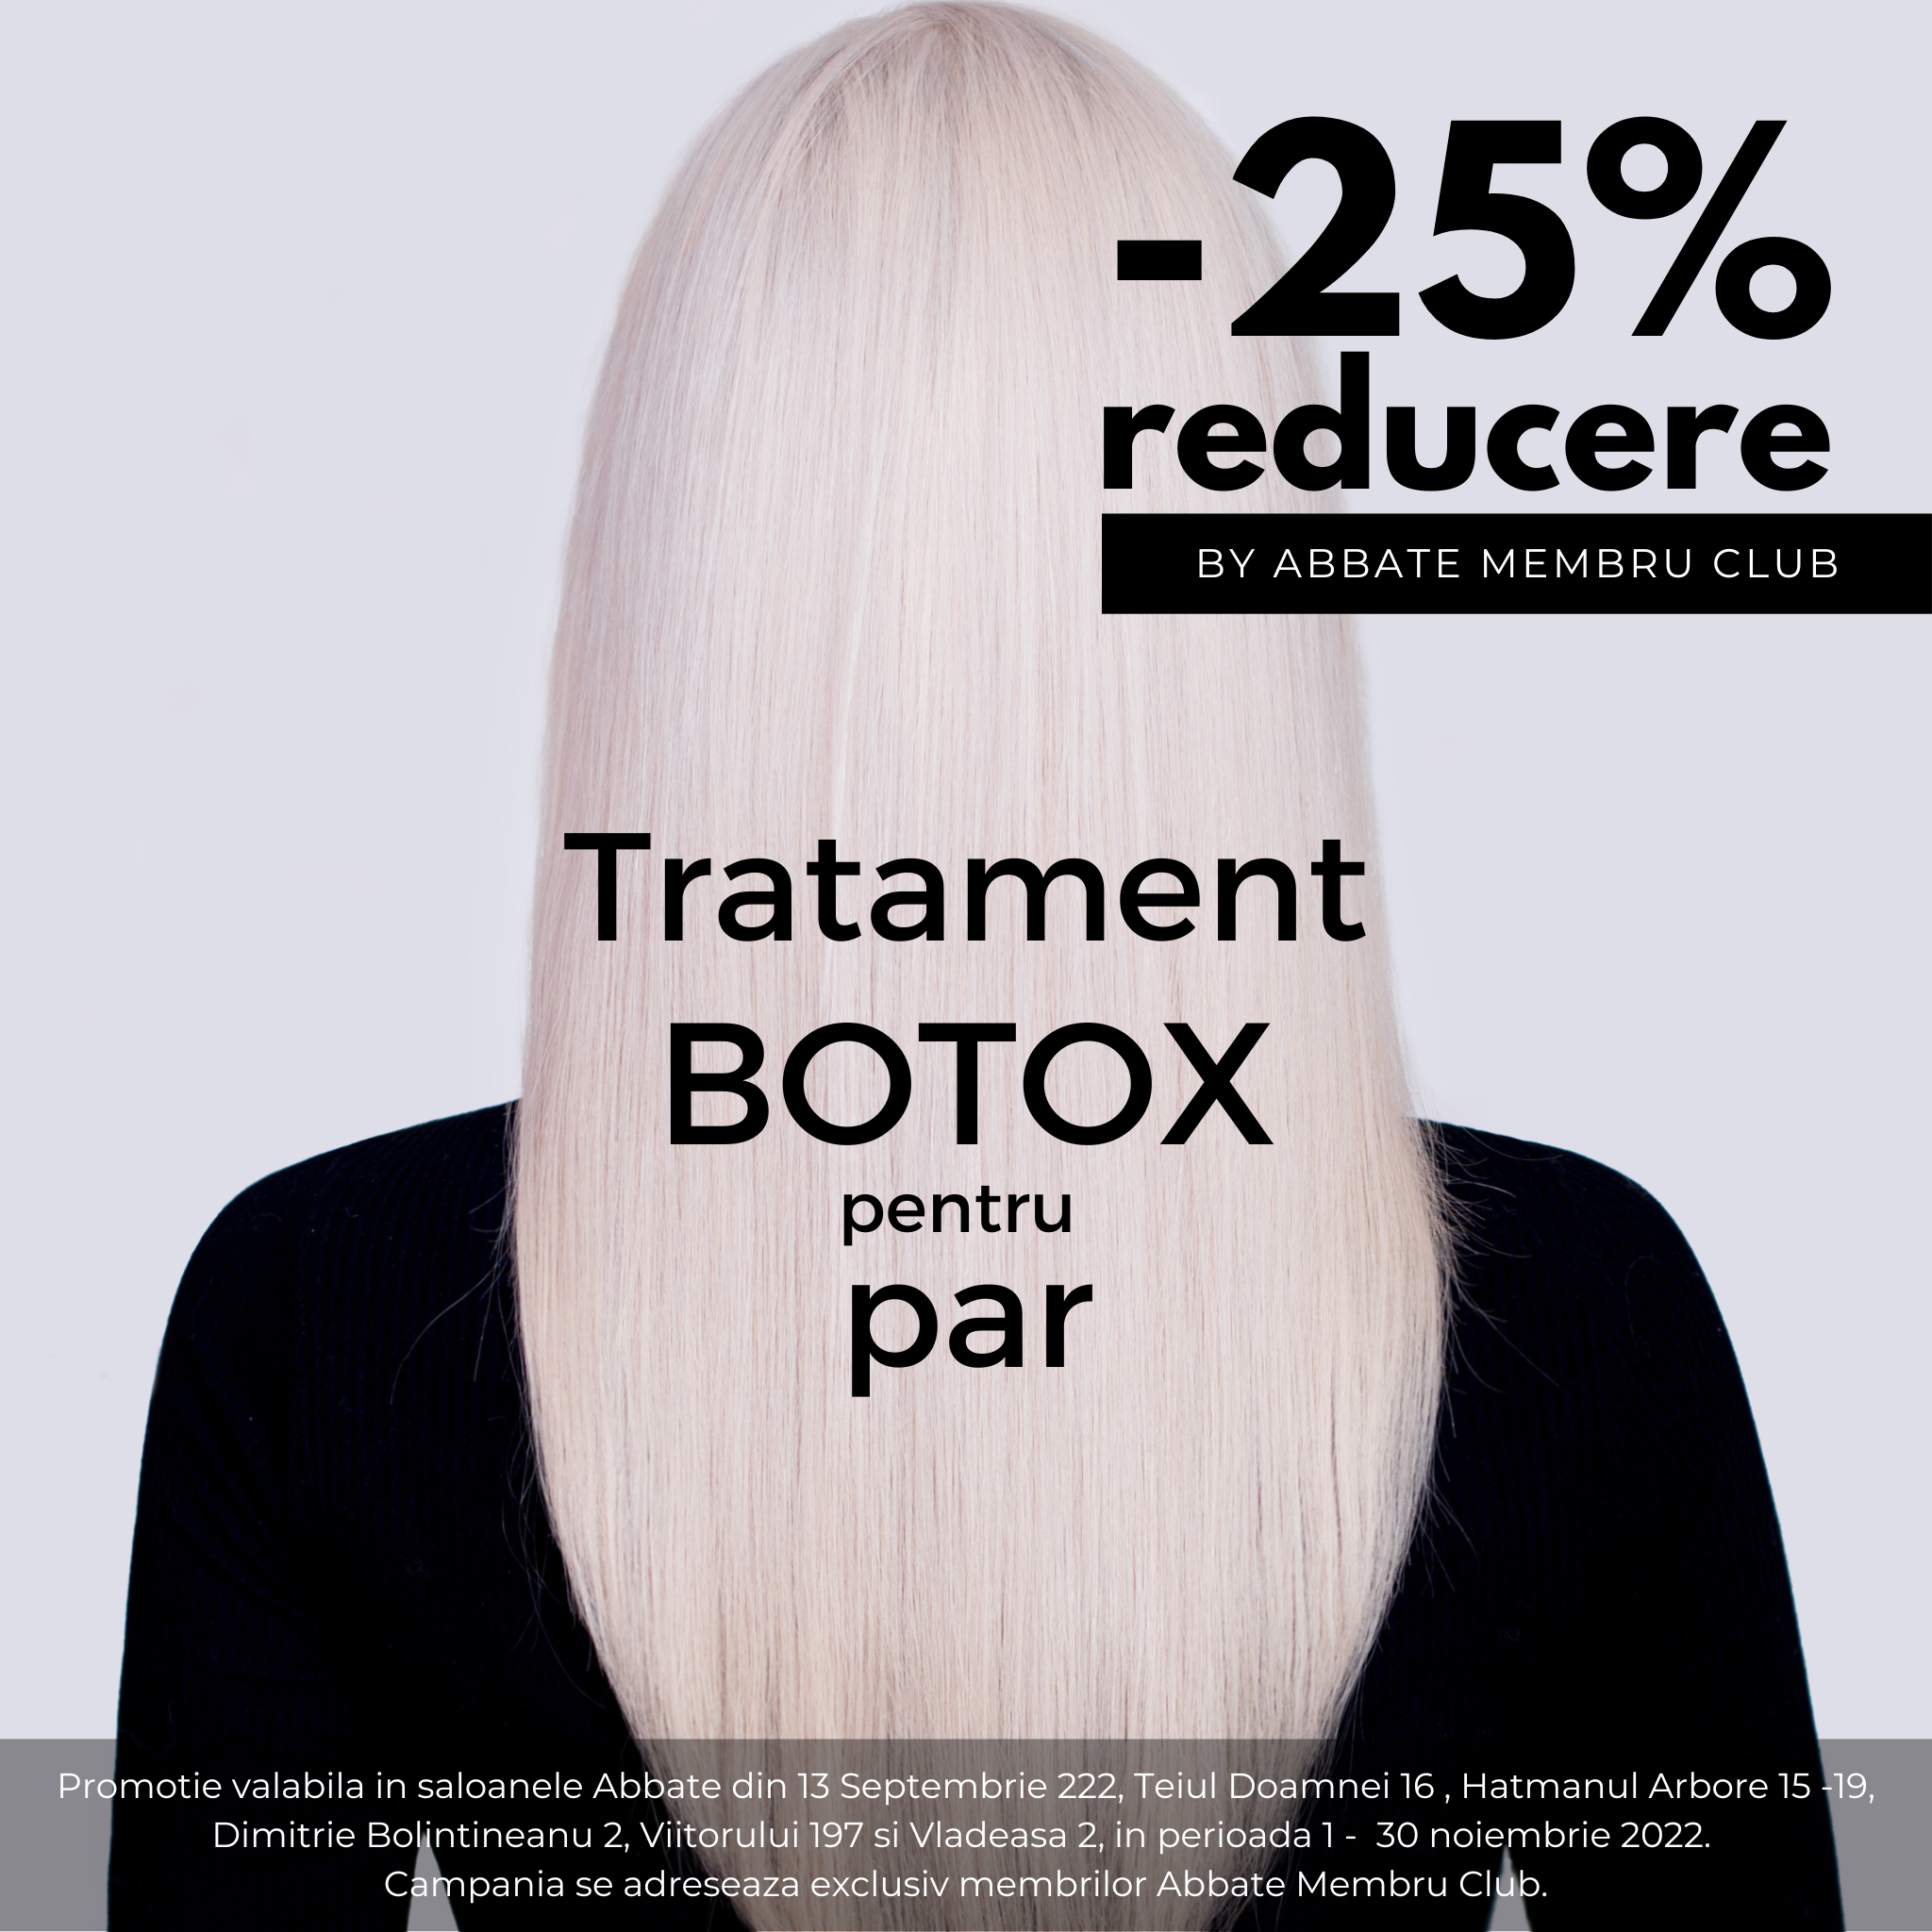 Oferta tratament regenerare par Botox Hair - Abbate.ro